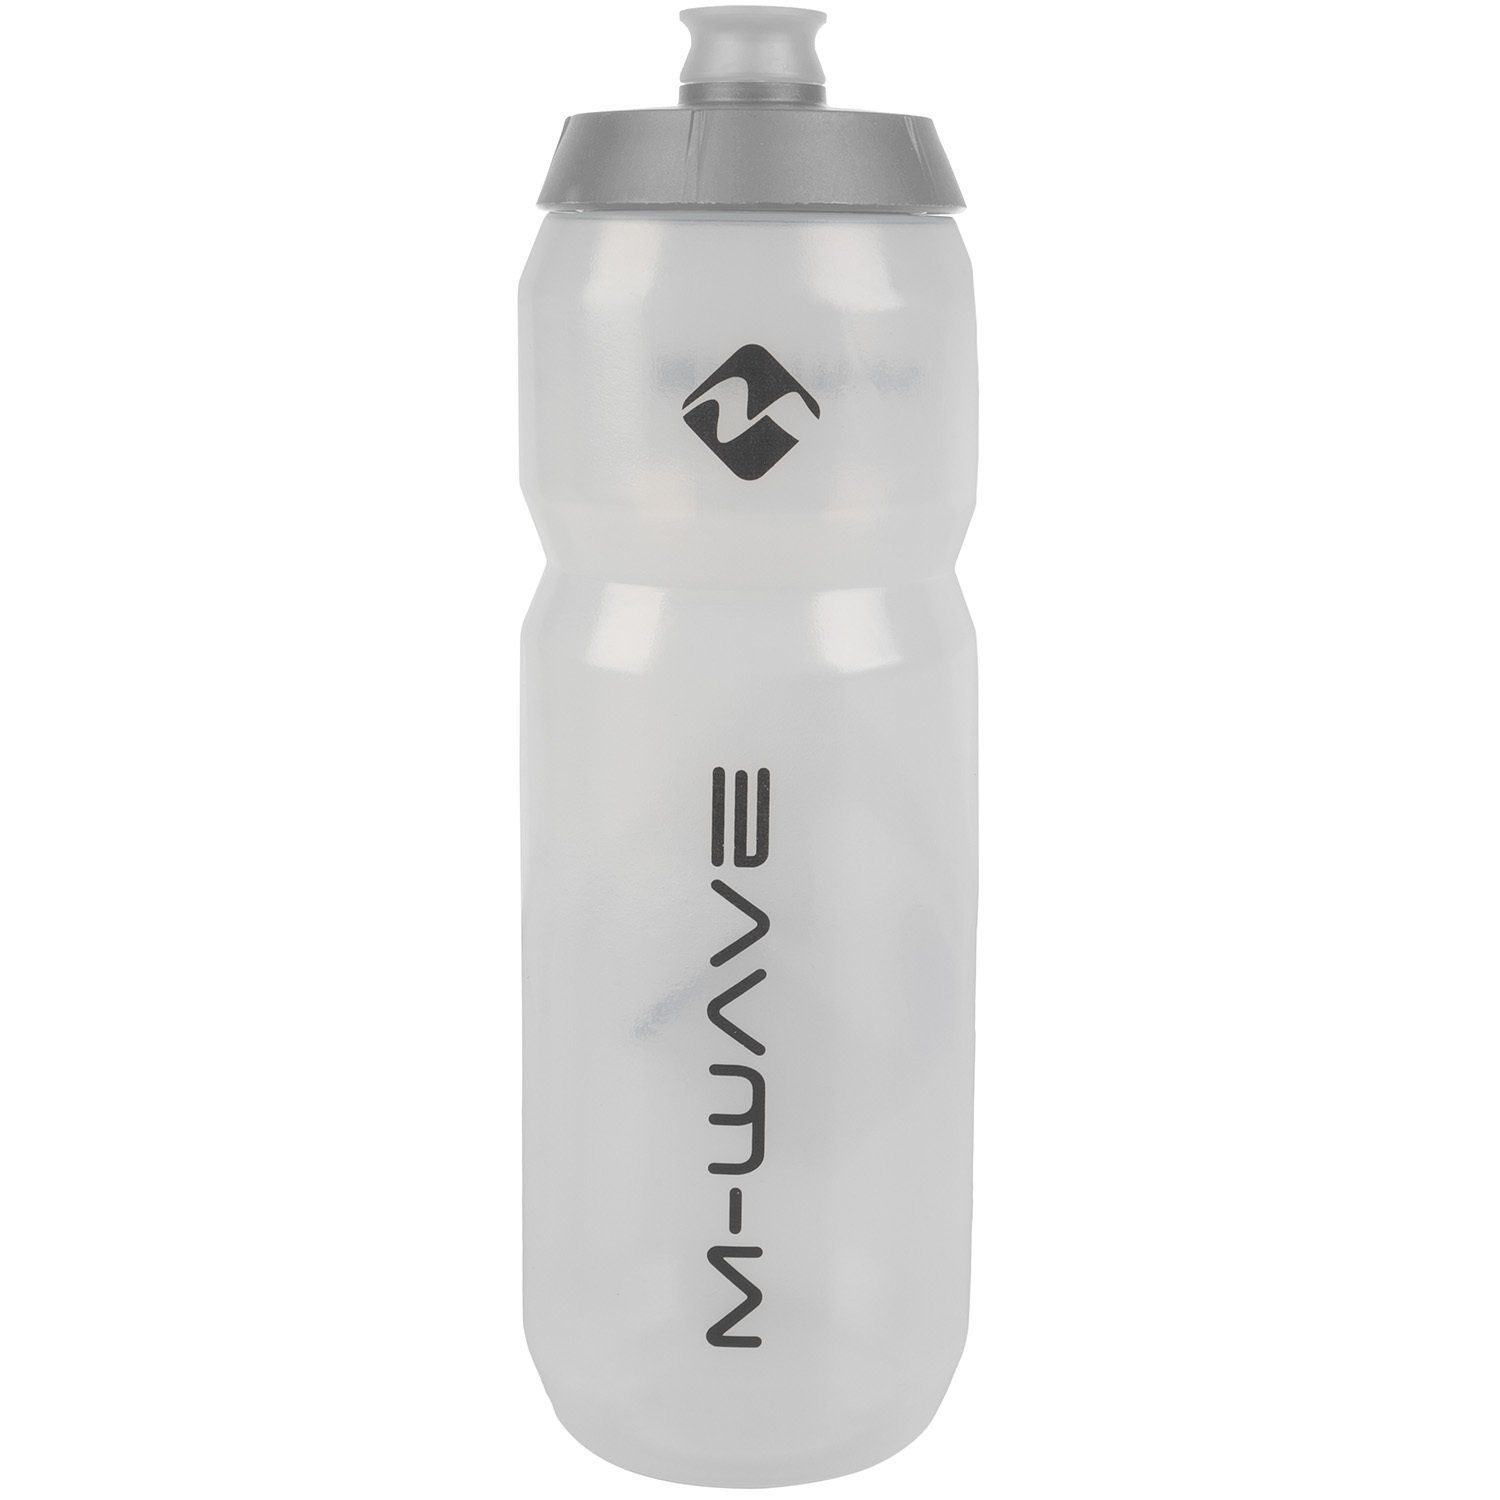 M-Wave Trinkflasche „PBO-750“, ml, Transparent, Sk mit 750 Kunststoff